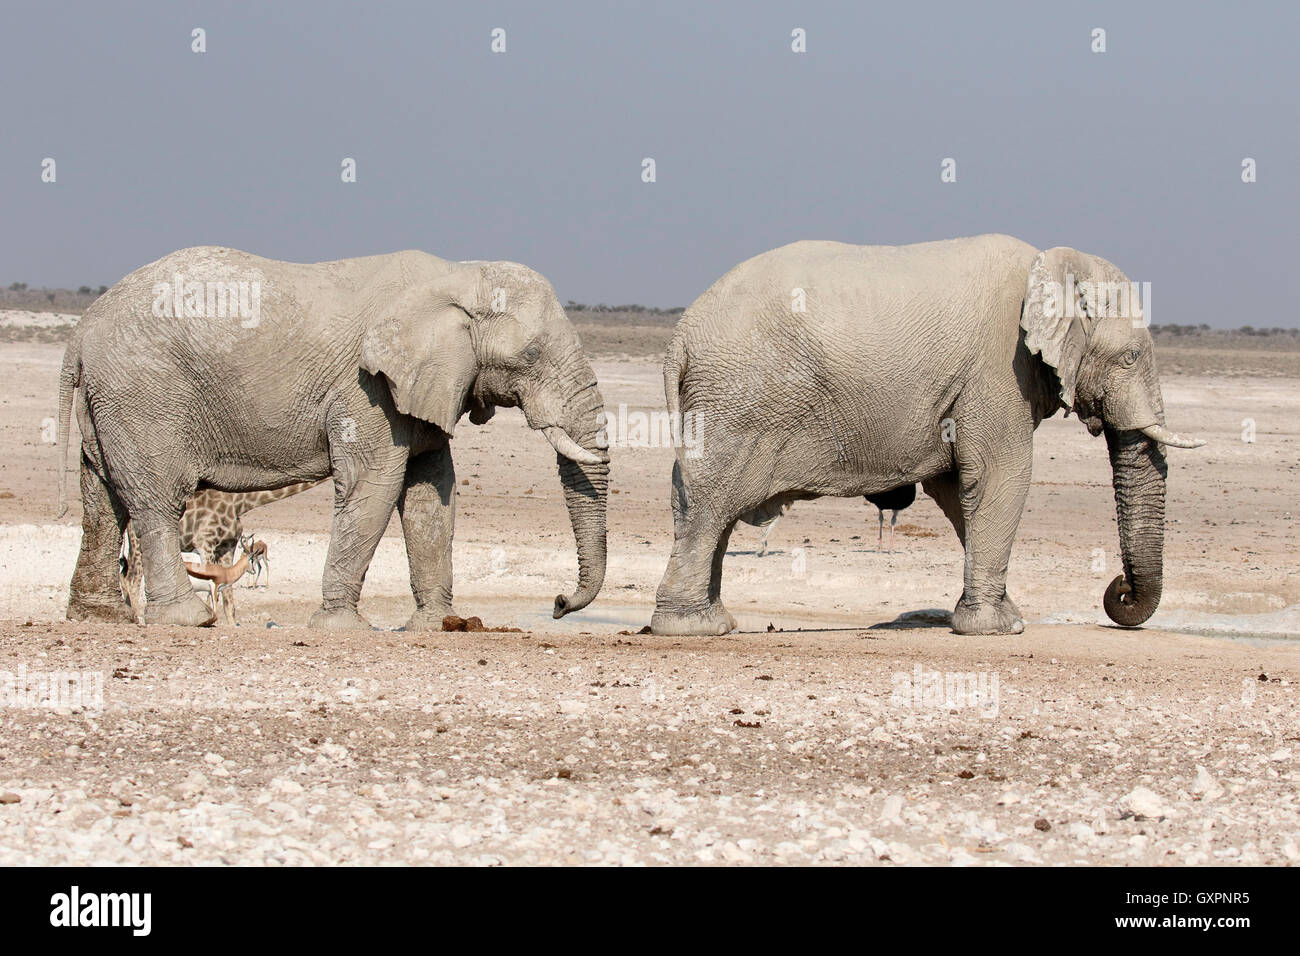 El elefante africano, Loxodonta africana, dos mamíferos, de Etosha, Namibia, agosto de 2016 Foto de stock